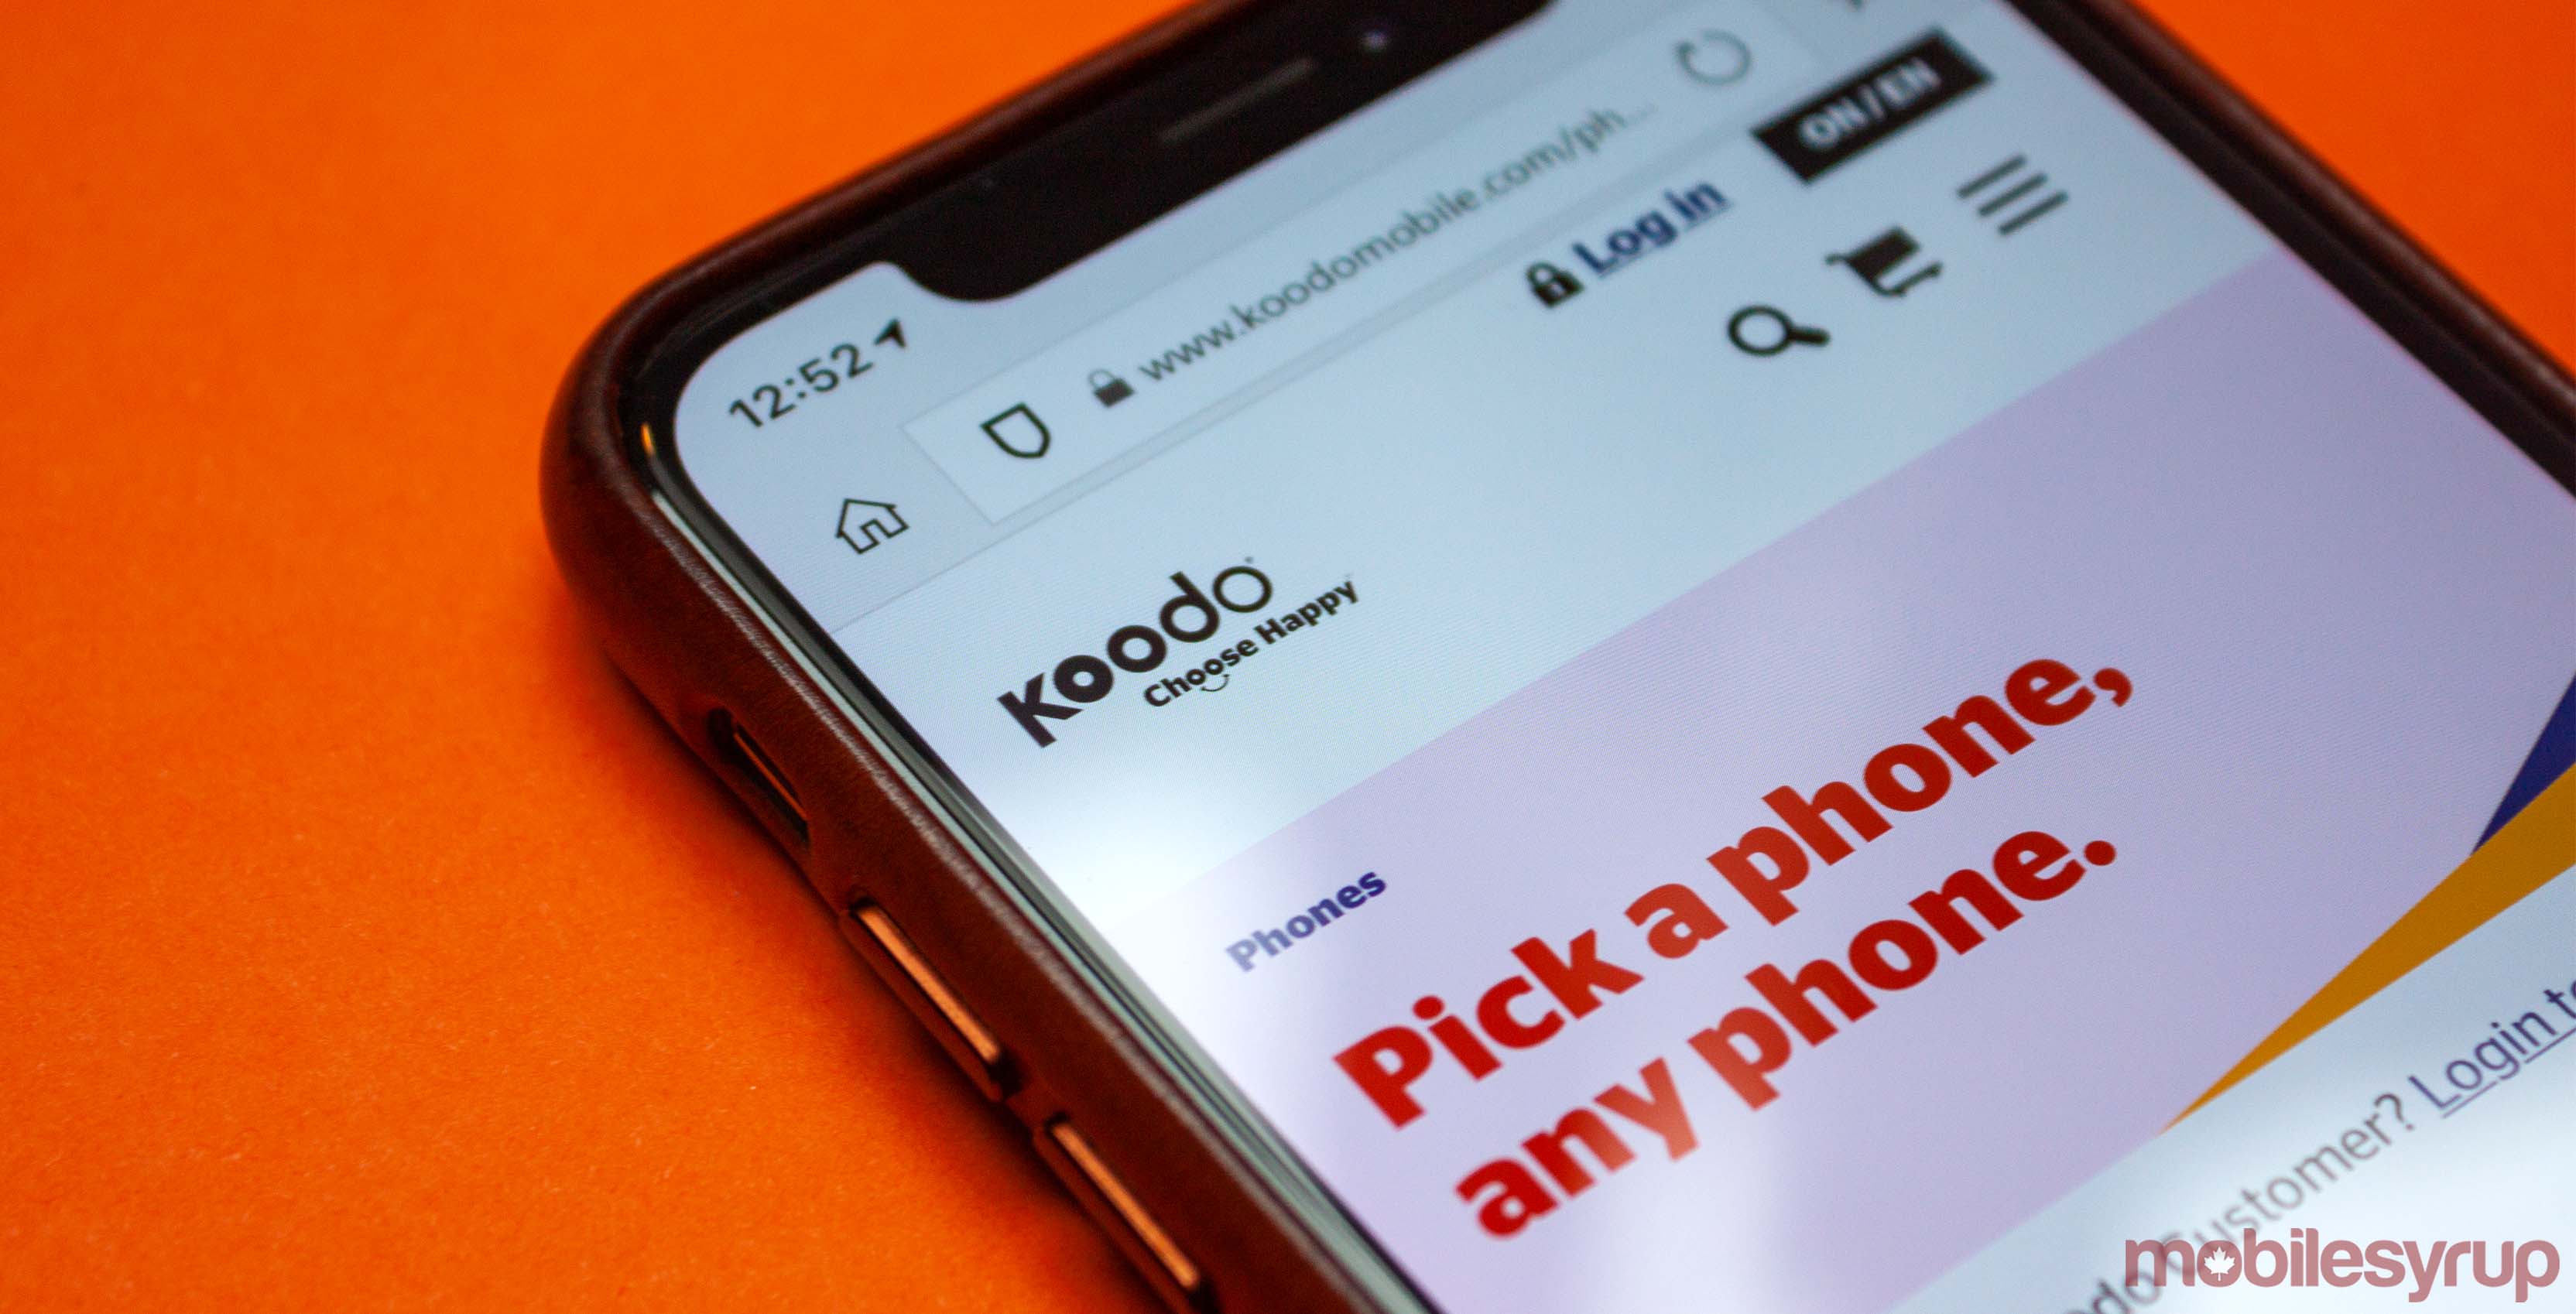 Koodo website on iPhone